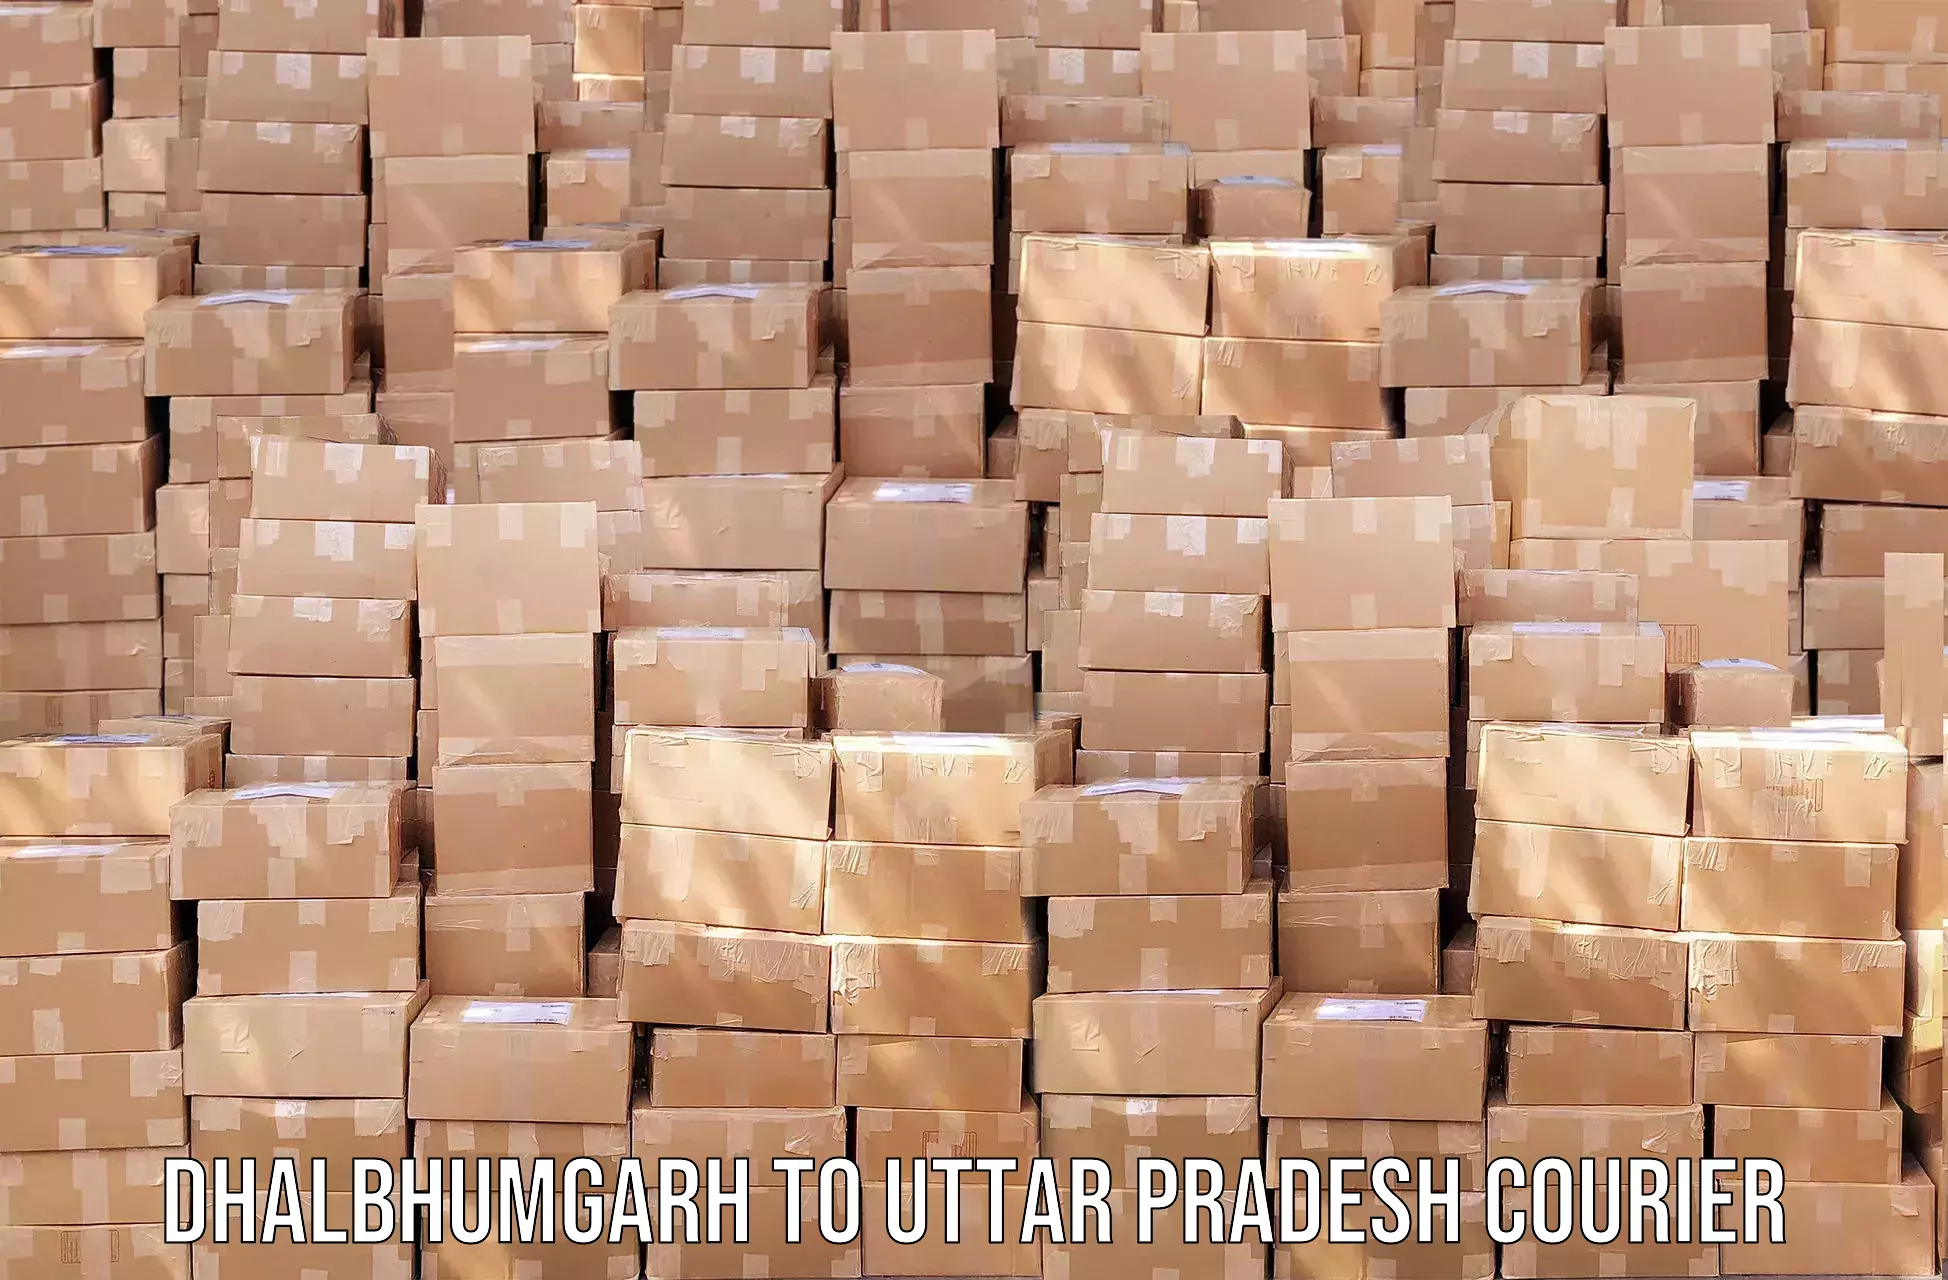 Efficient courier operations Dhalbhumgarh to Kirauli